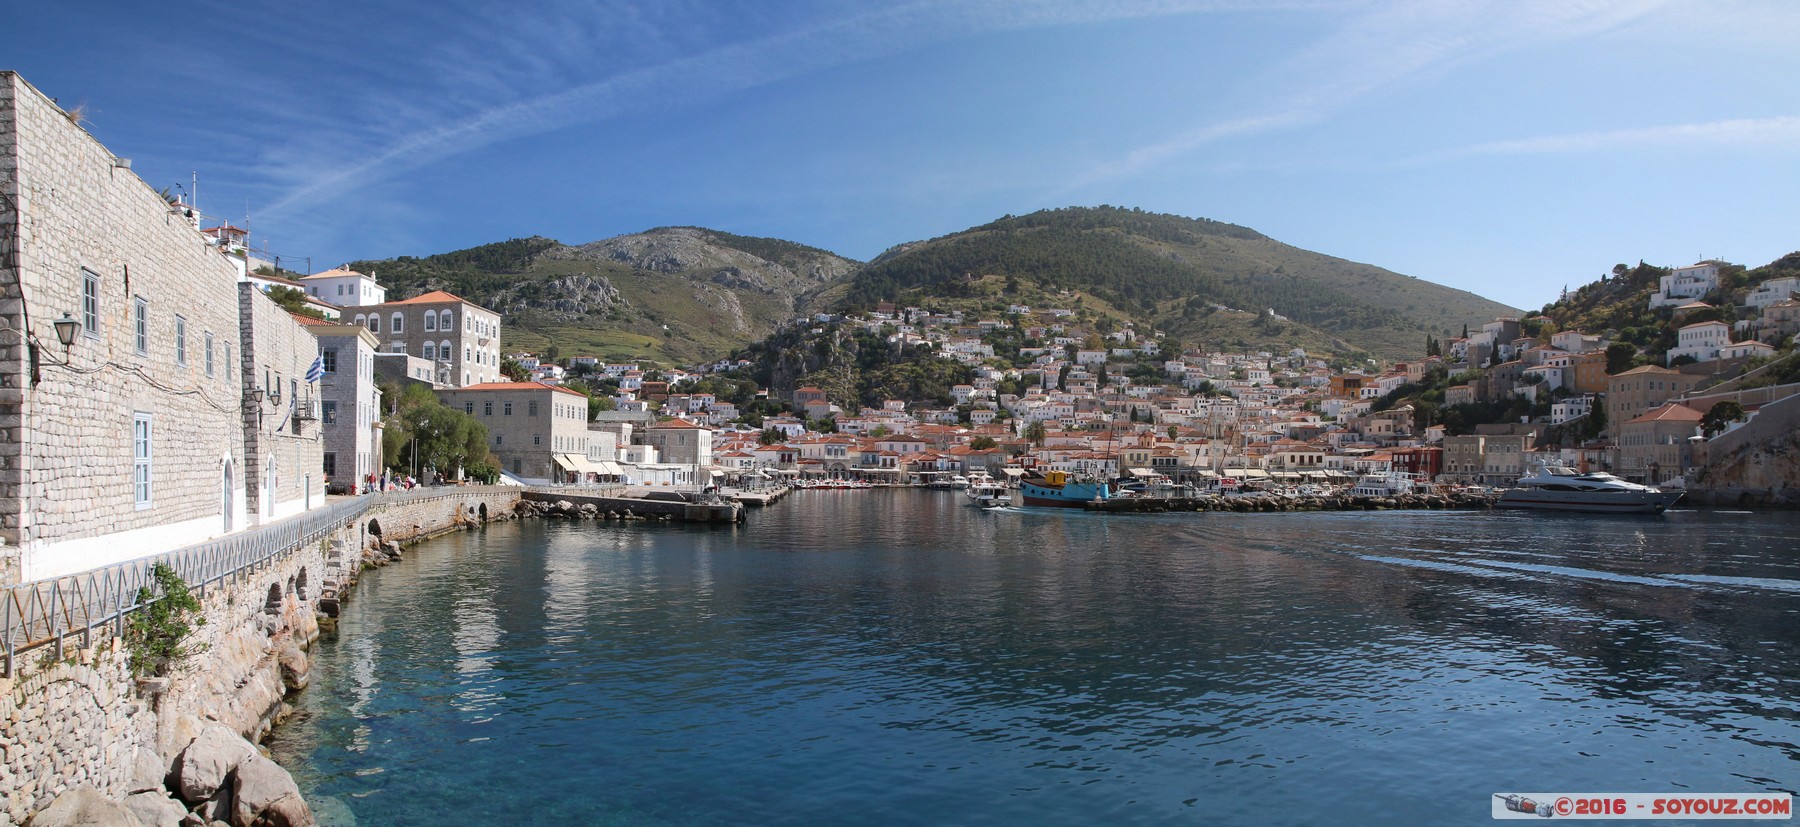 Hydra Port - panorama
Stitched Panorama
Mots-clés: Ermioni GRC Grèce dra Saronic Islands Hydra Port panorama Mer